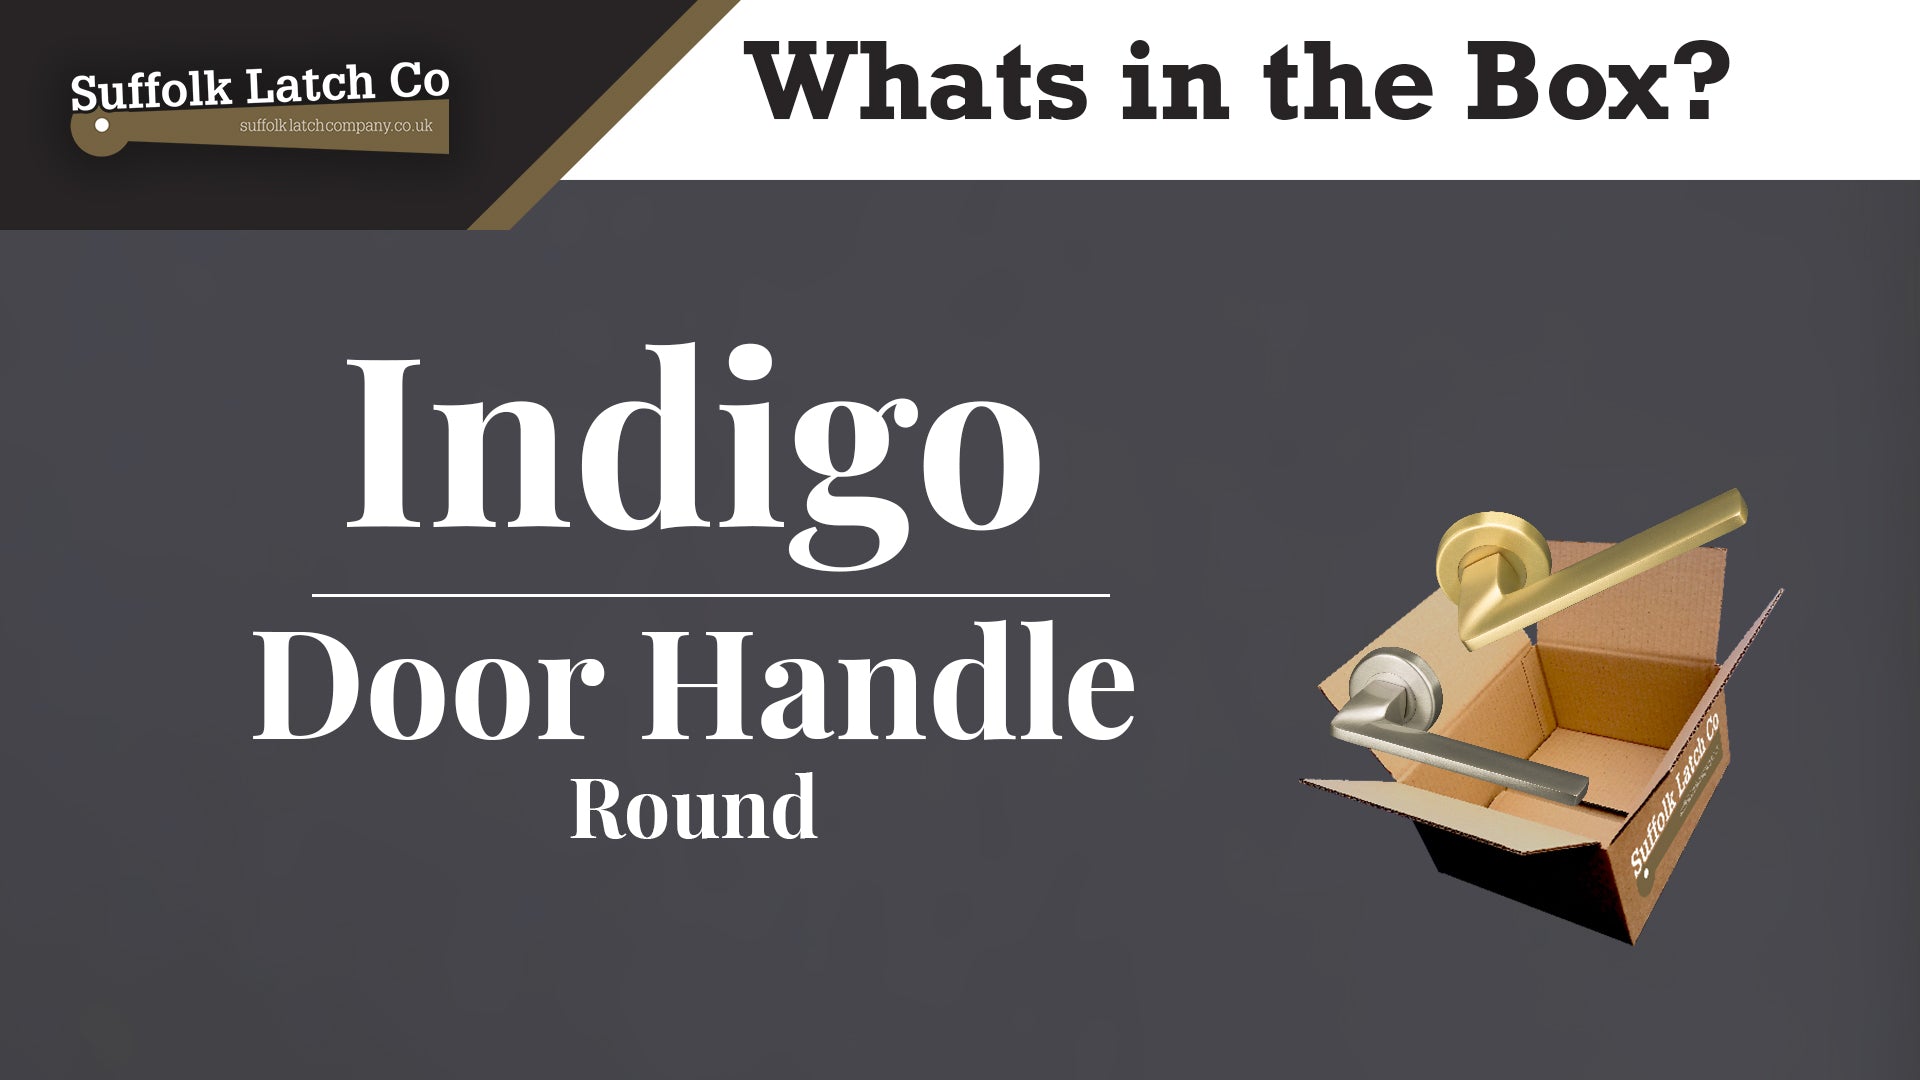 What's in the Box: Indigo Round Rose Door Handles